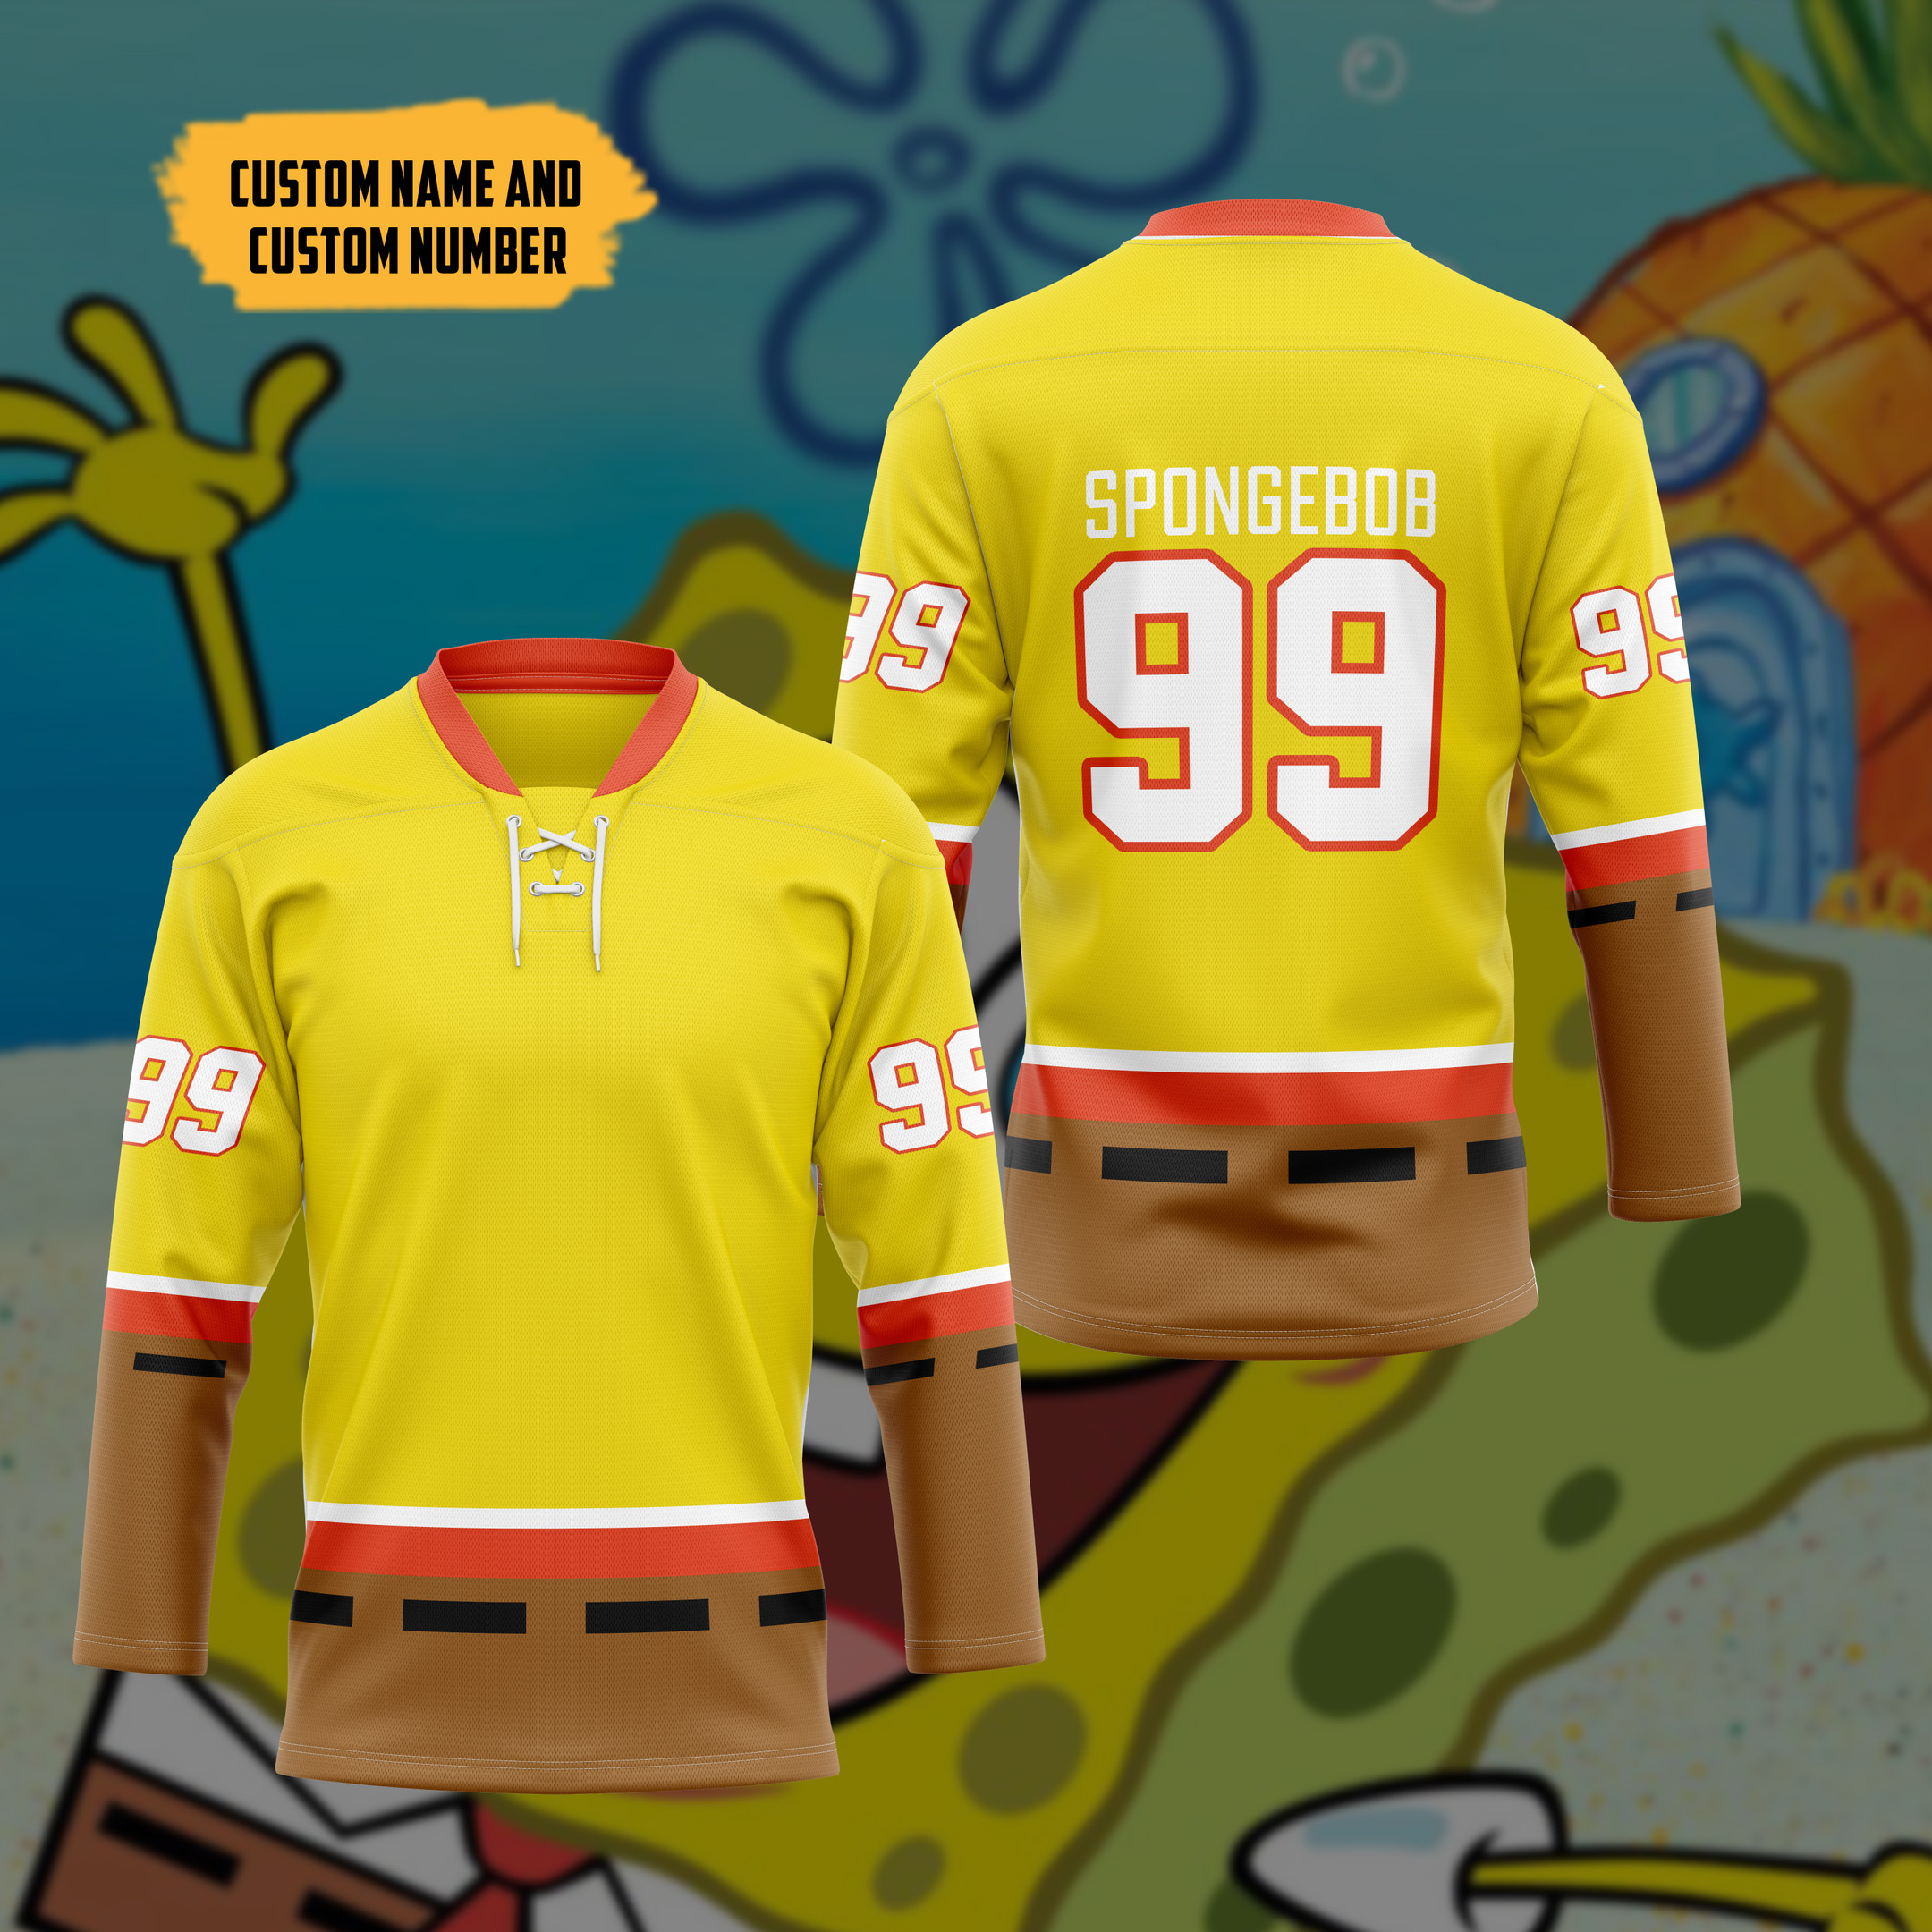 SpongeBob Custom Hockey Jersey2